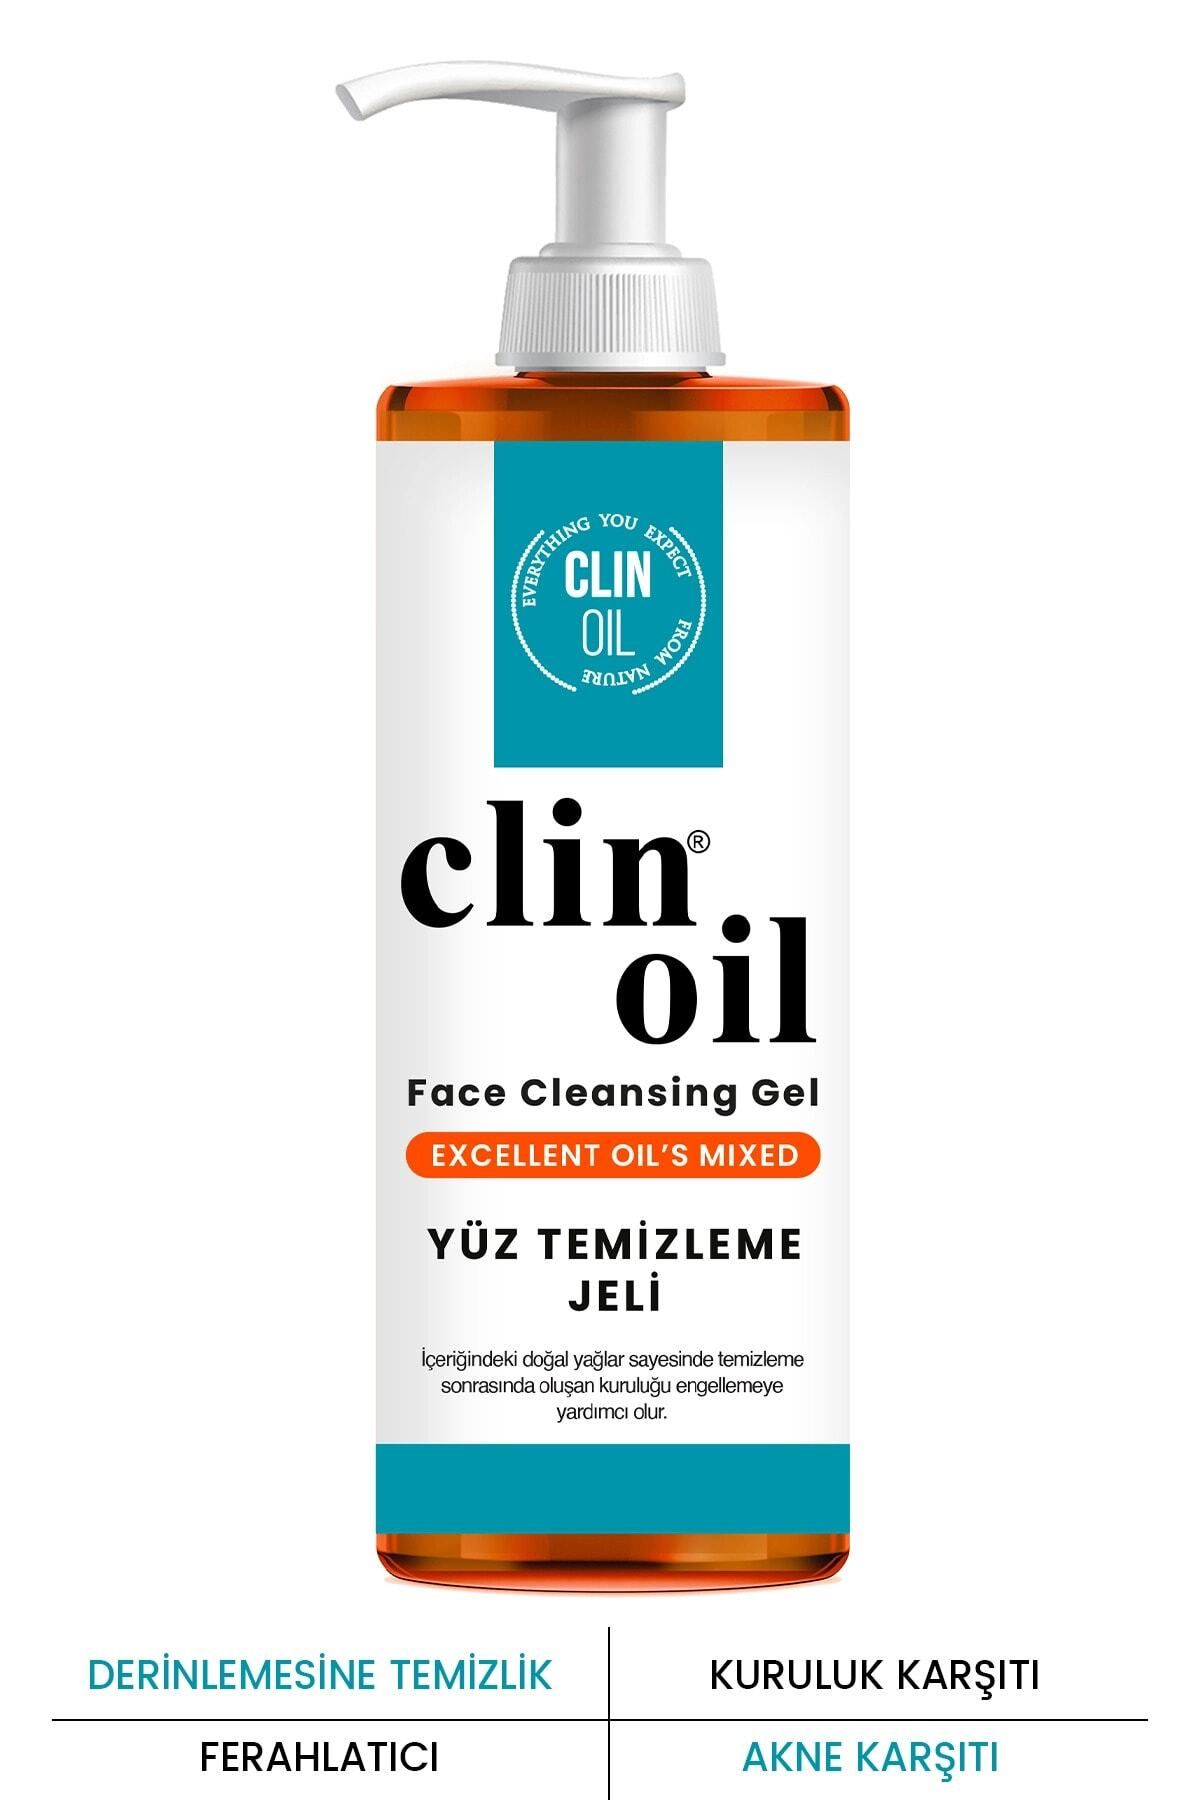 PROCSIN ژل تمیز کننده چهره Clin Oil برای جوش و لکه ها 150 میلی لیتر